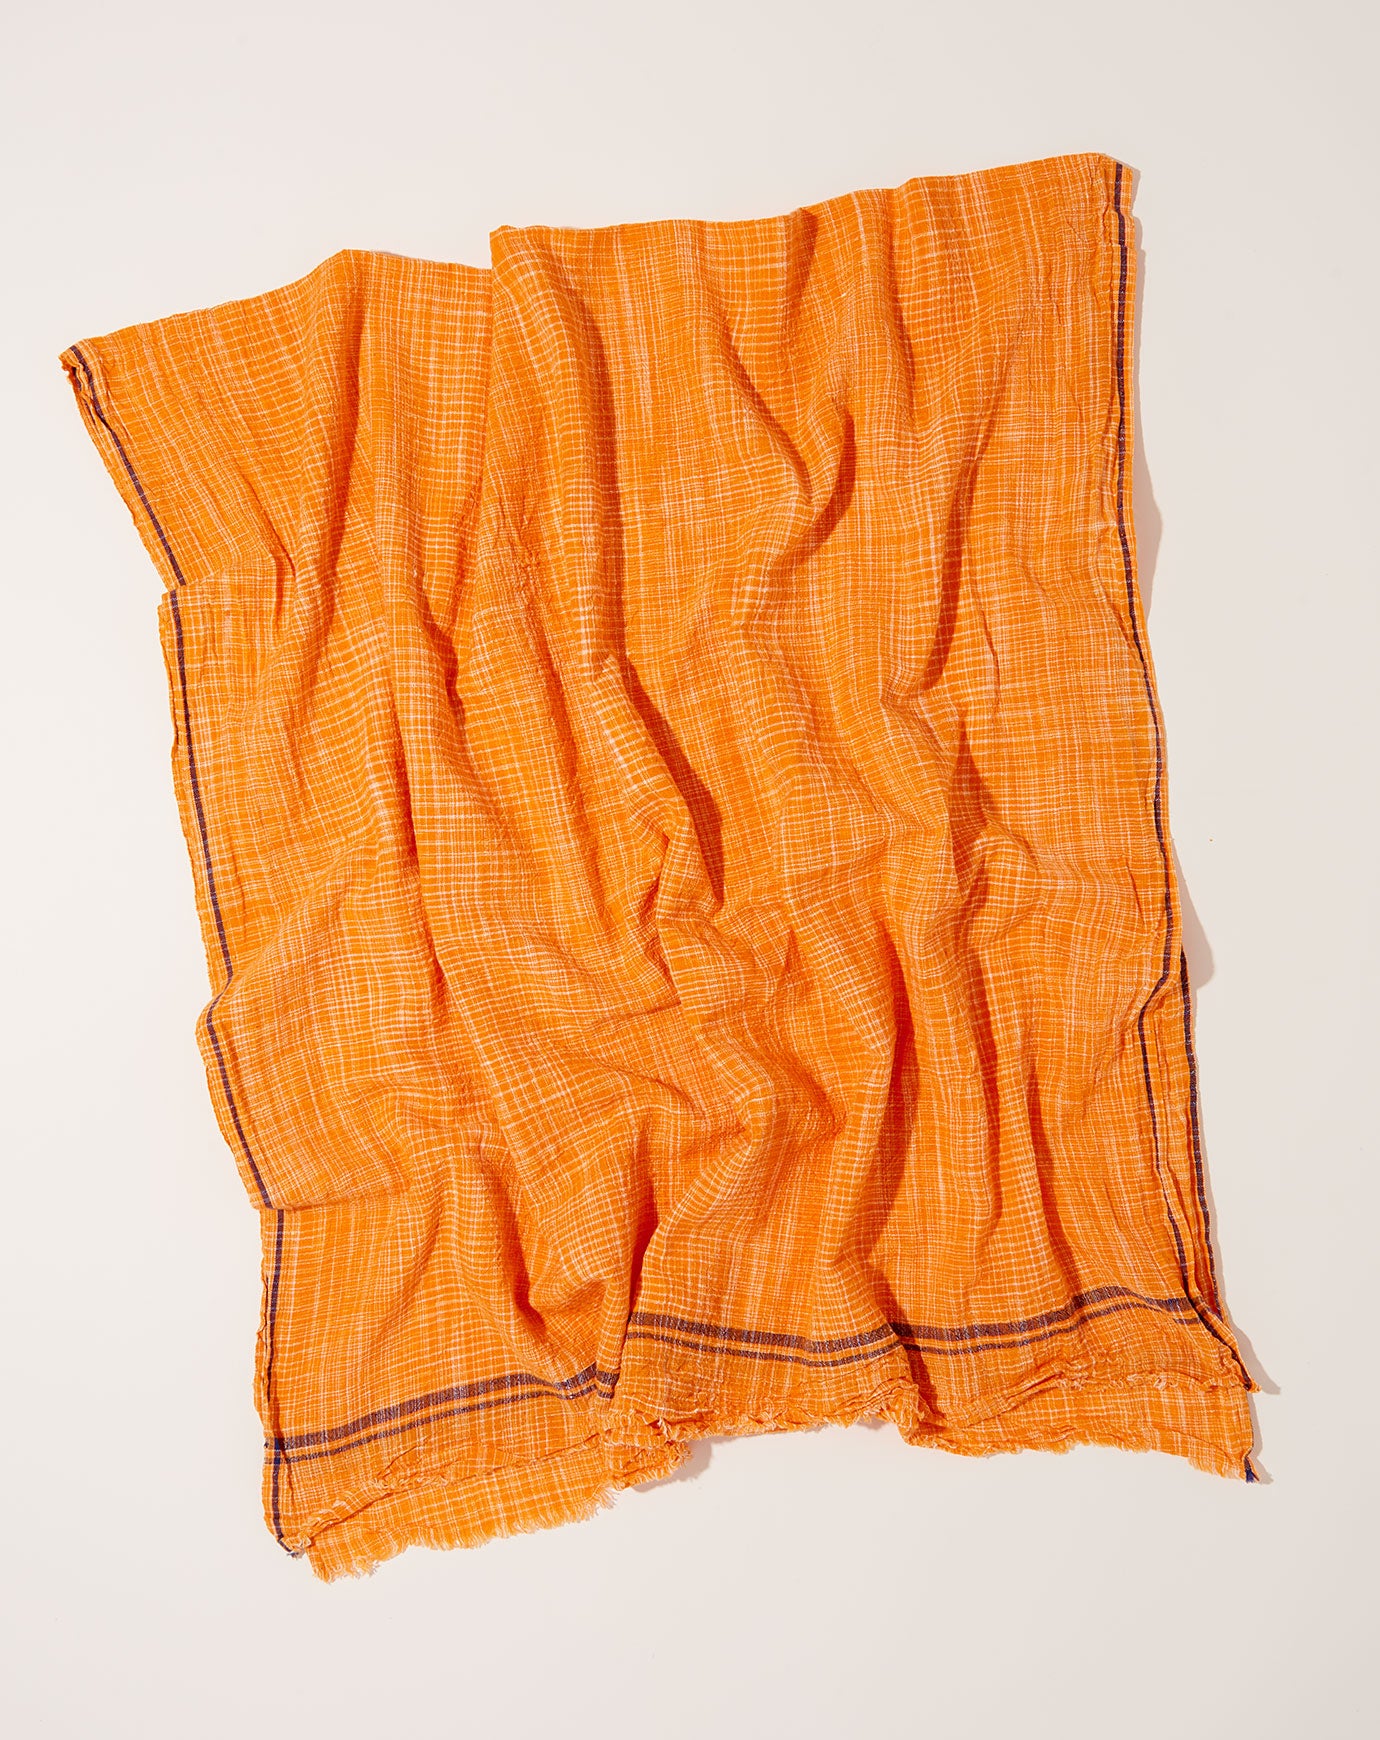 Auntie Oti Rustic Towel in Tangerine